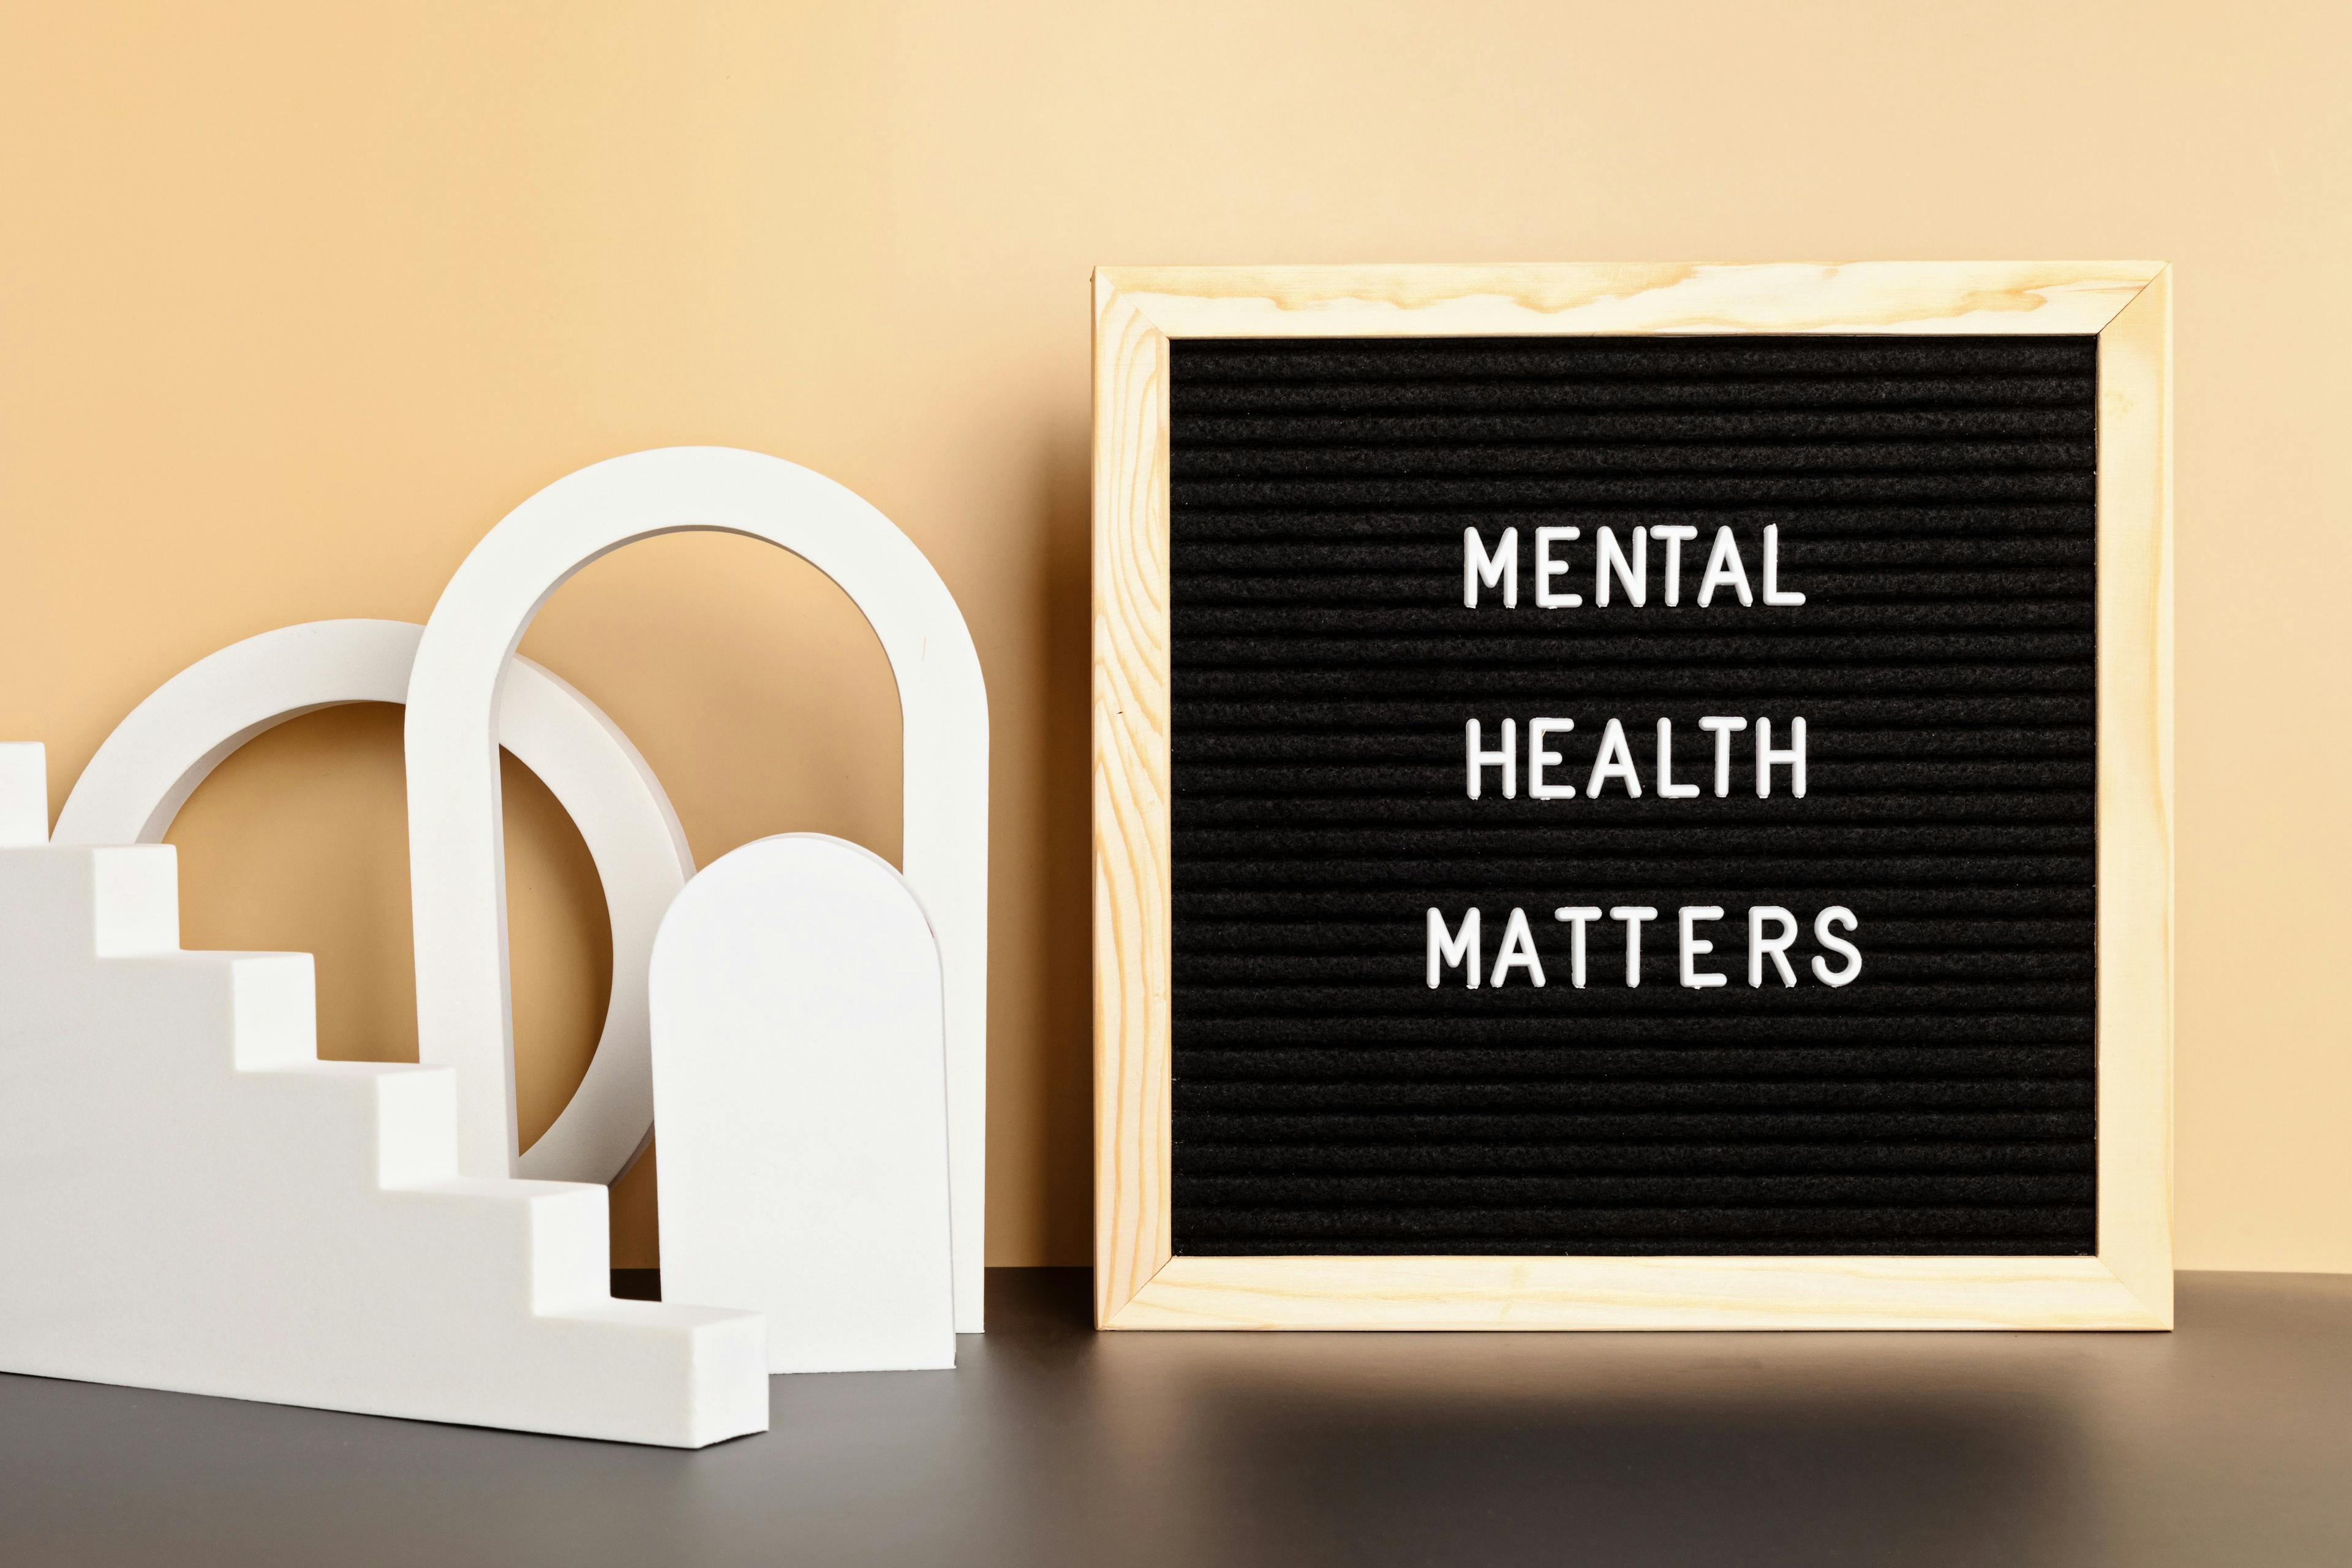 Mental health matters | Image Credit: © netrun78 - stock.adobe.com